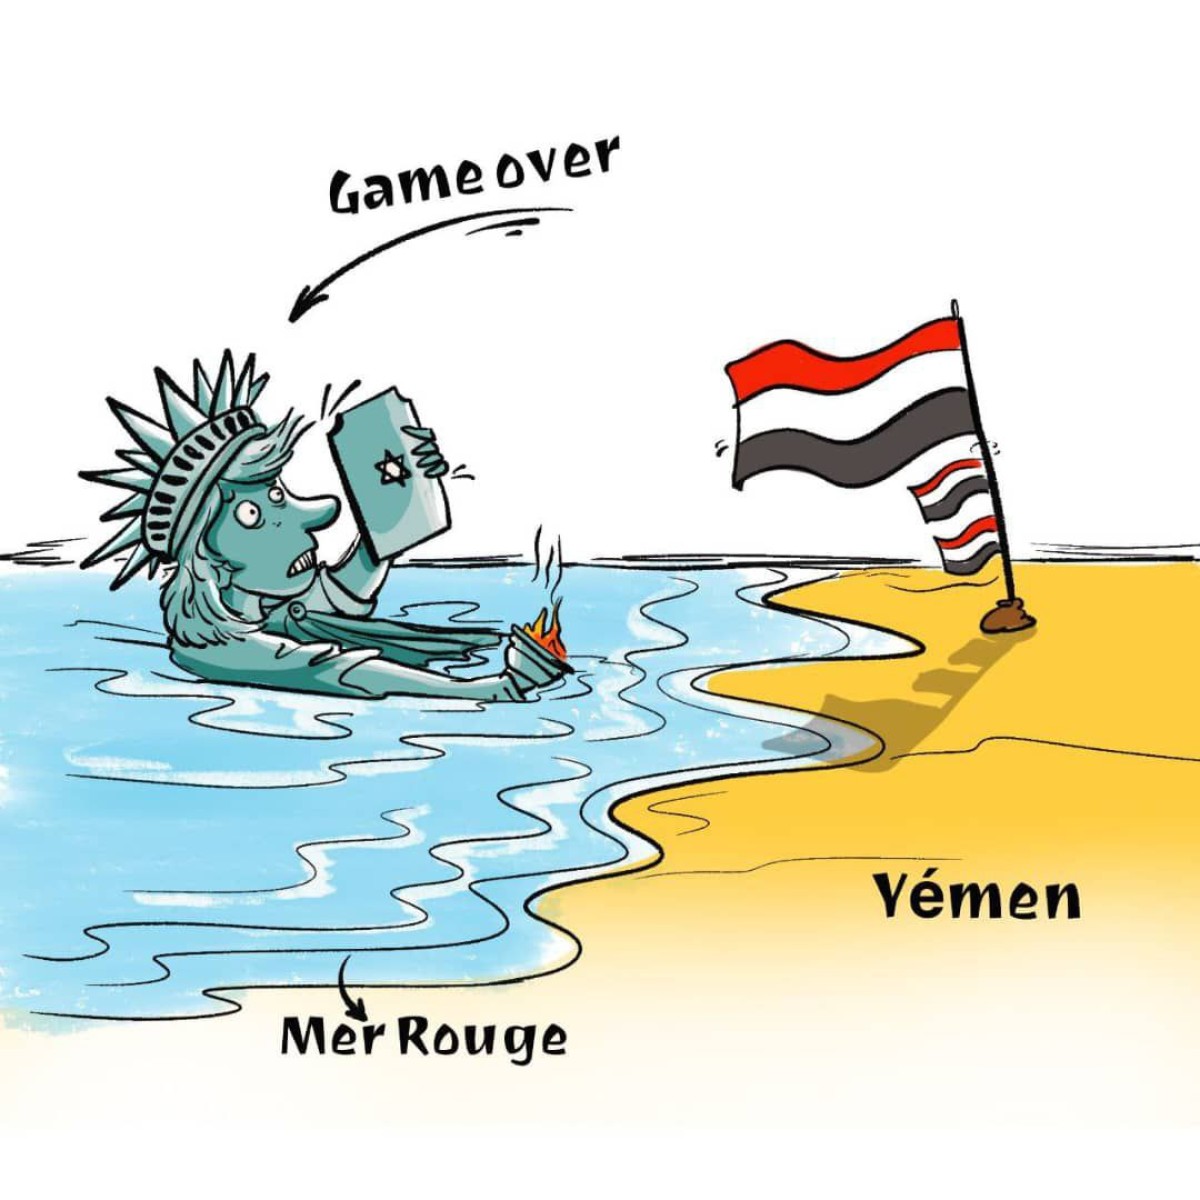 Game over Mer Rouge Yemen